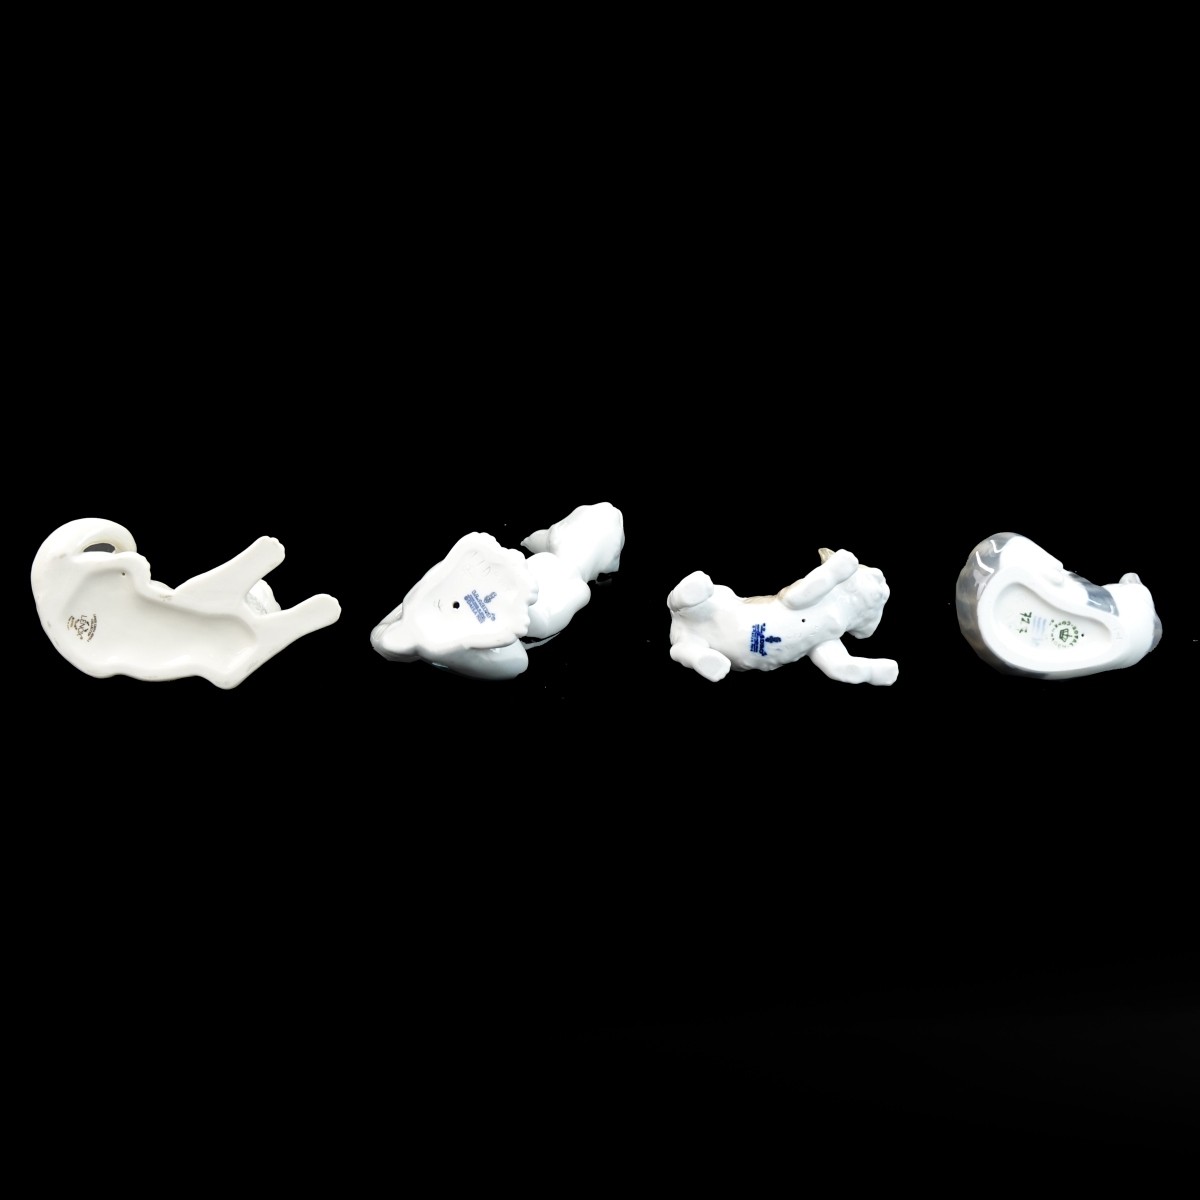 Four Playful Porcelain Cat Figurines